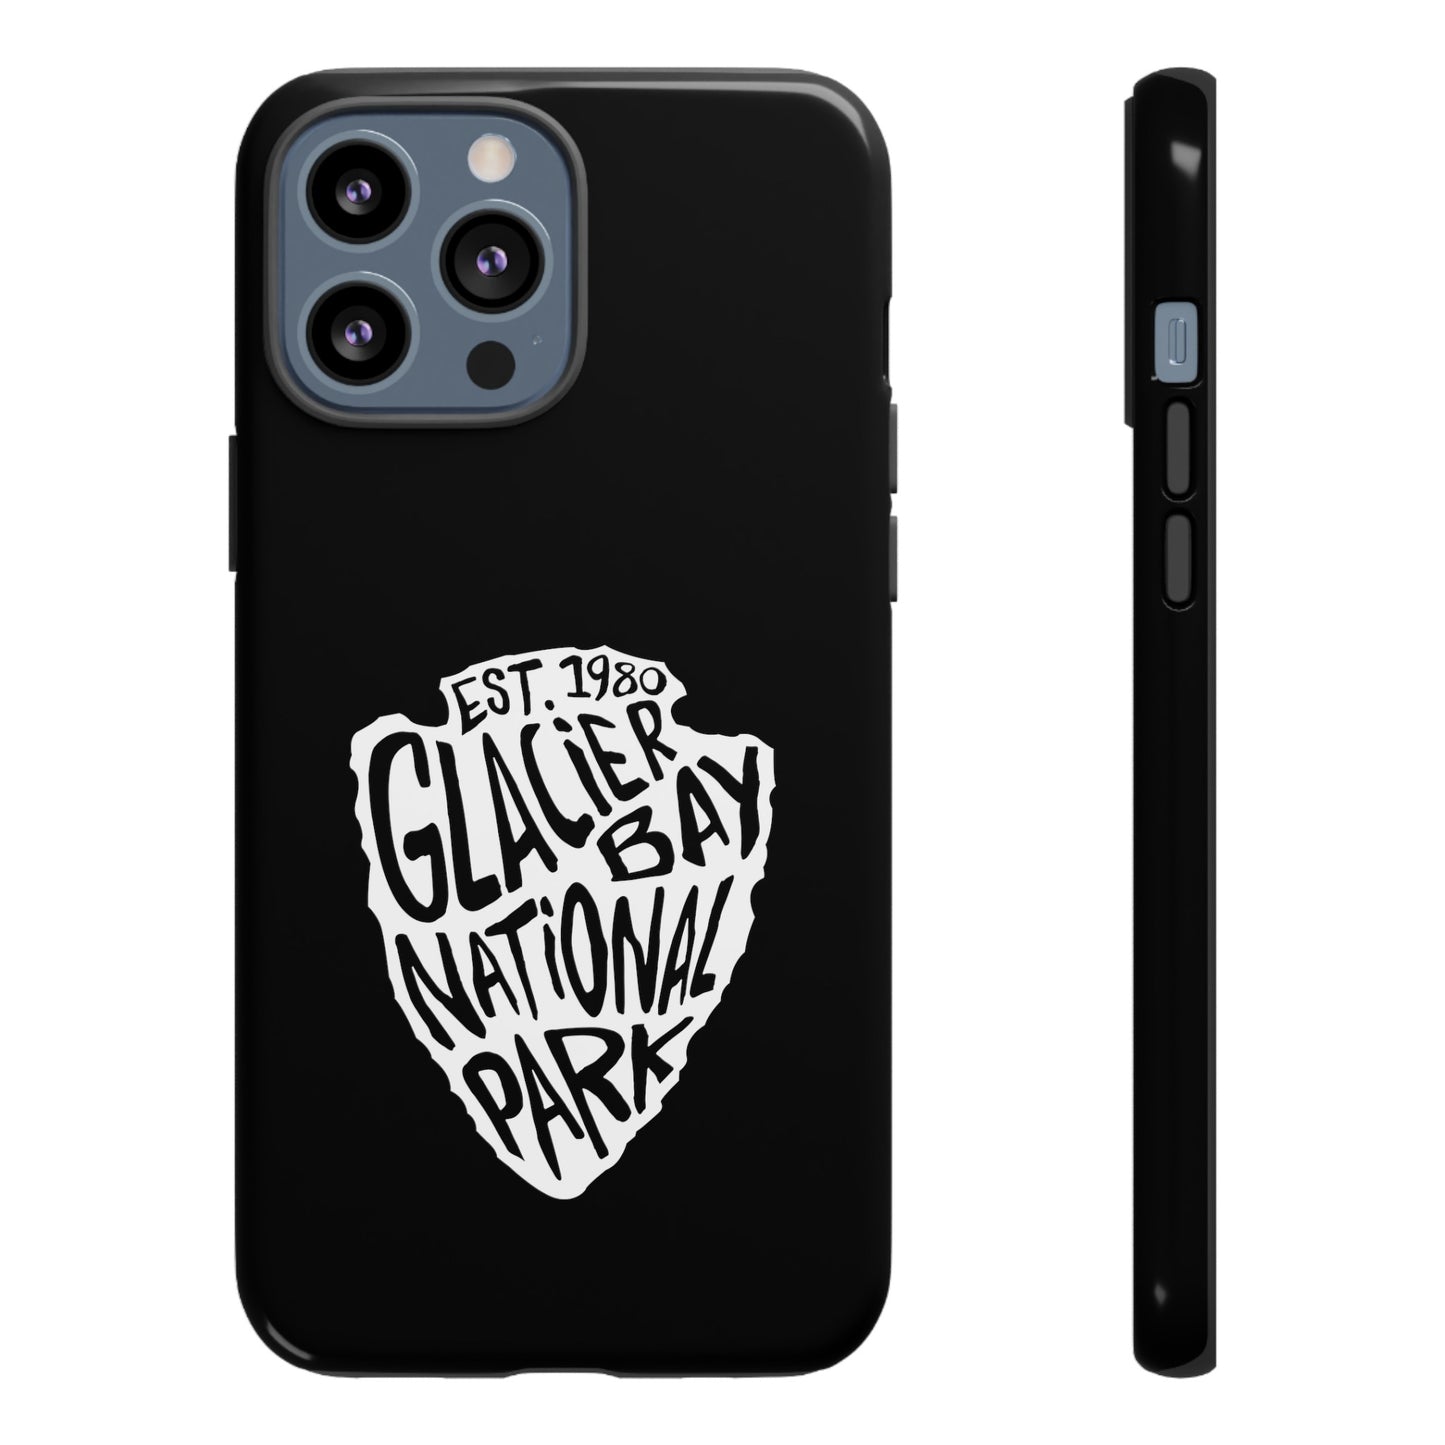 Glacier Bay National Park Phone Case - Arrowhead Design